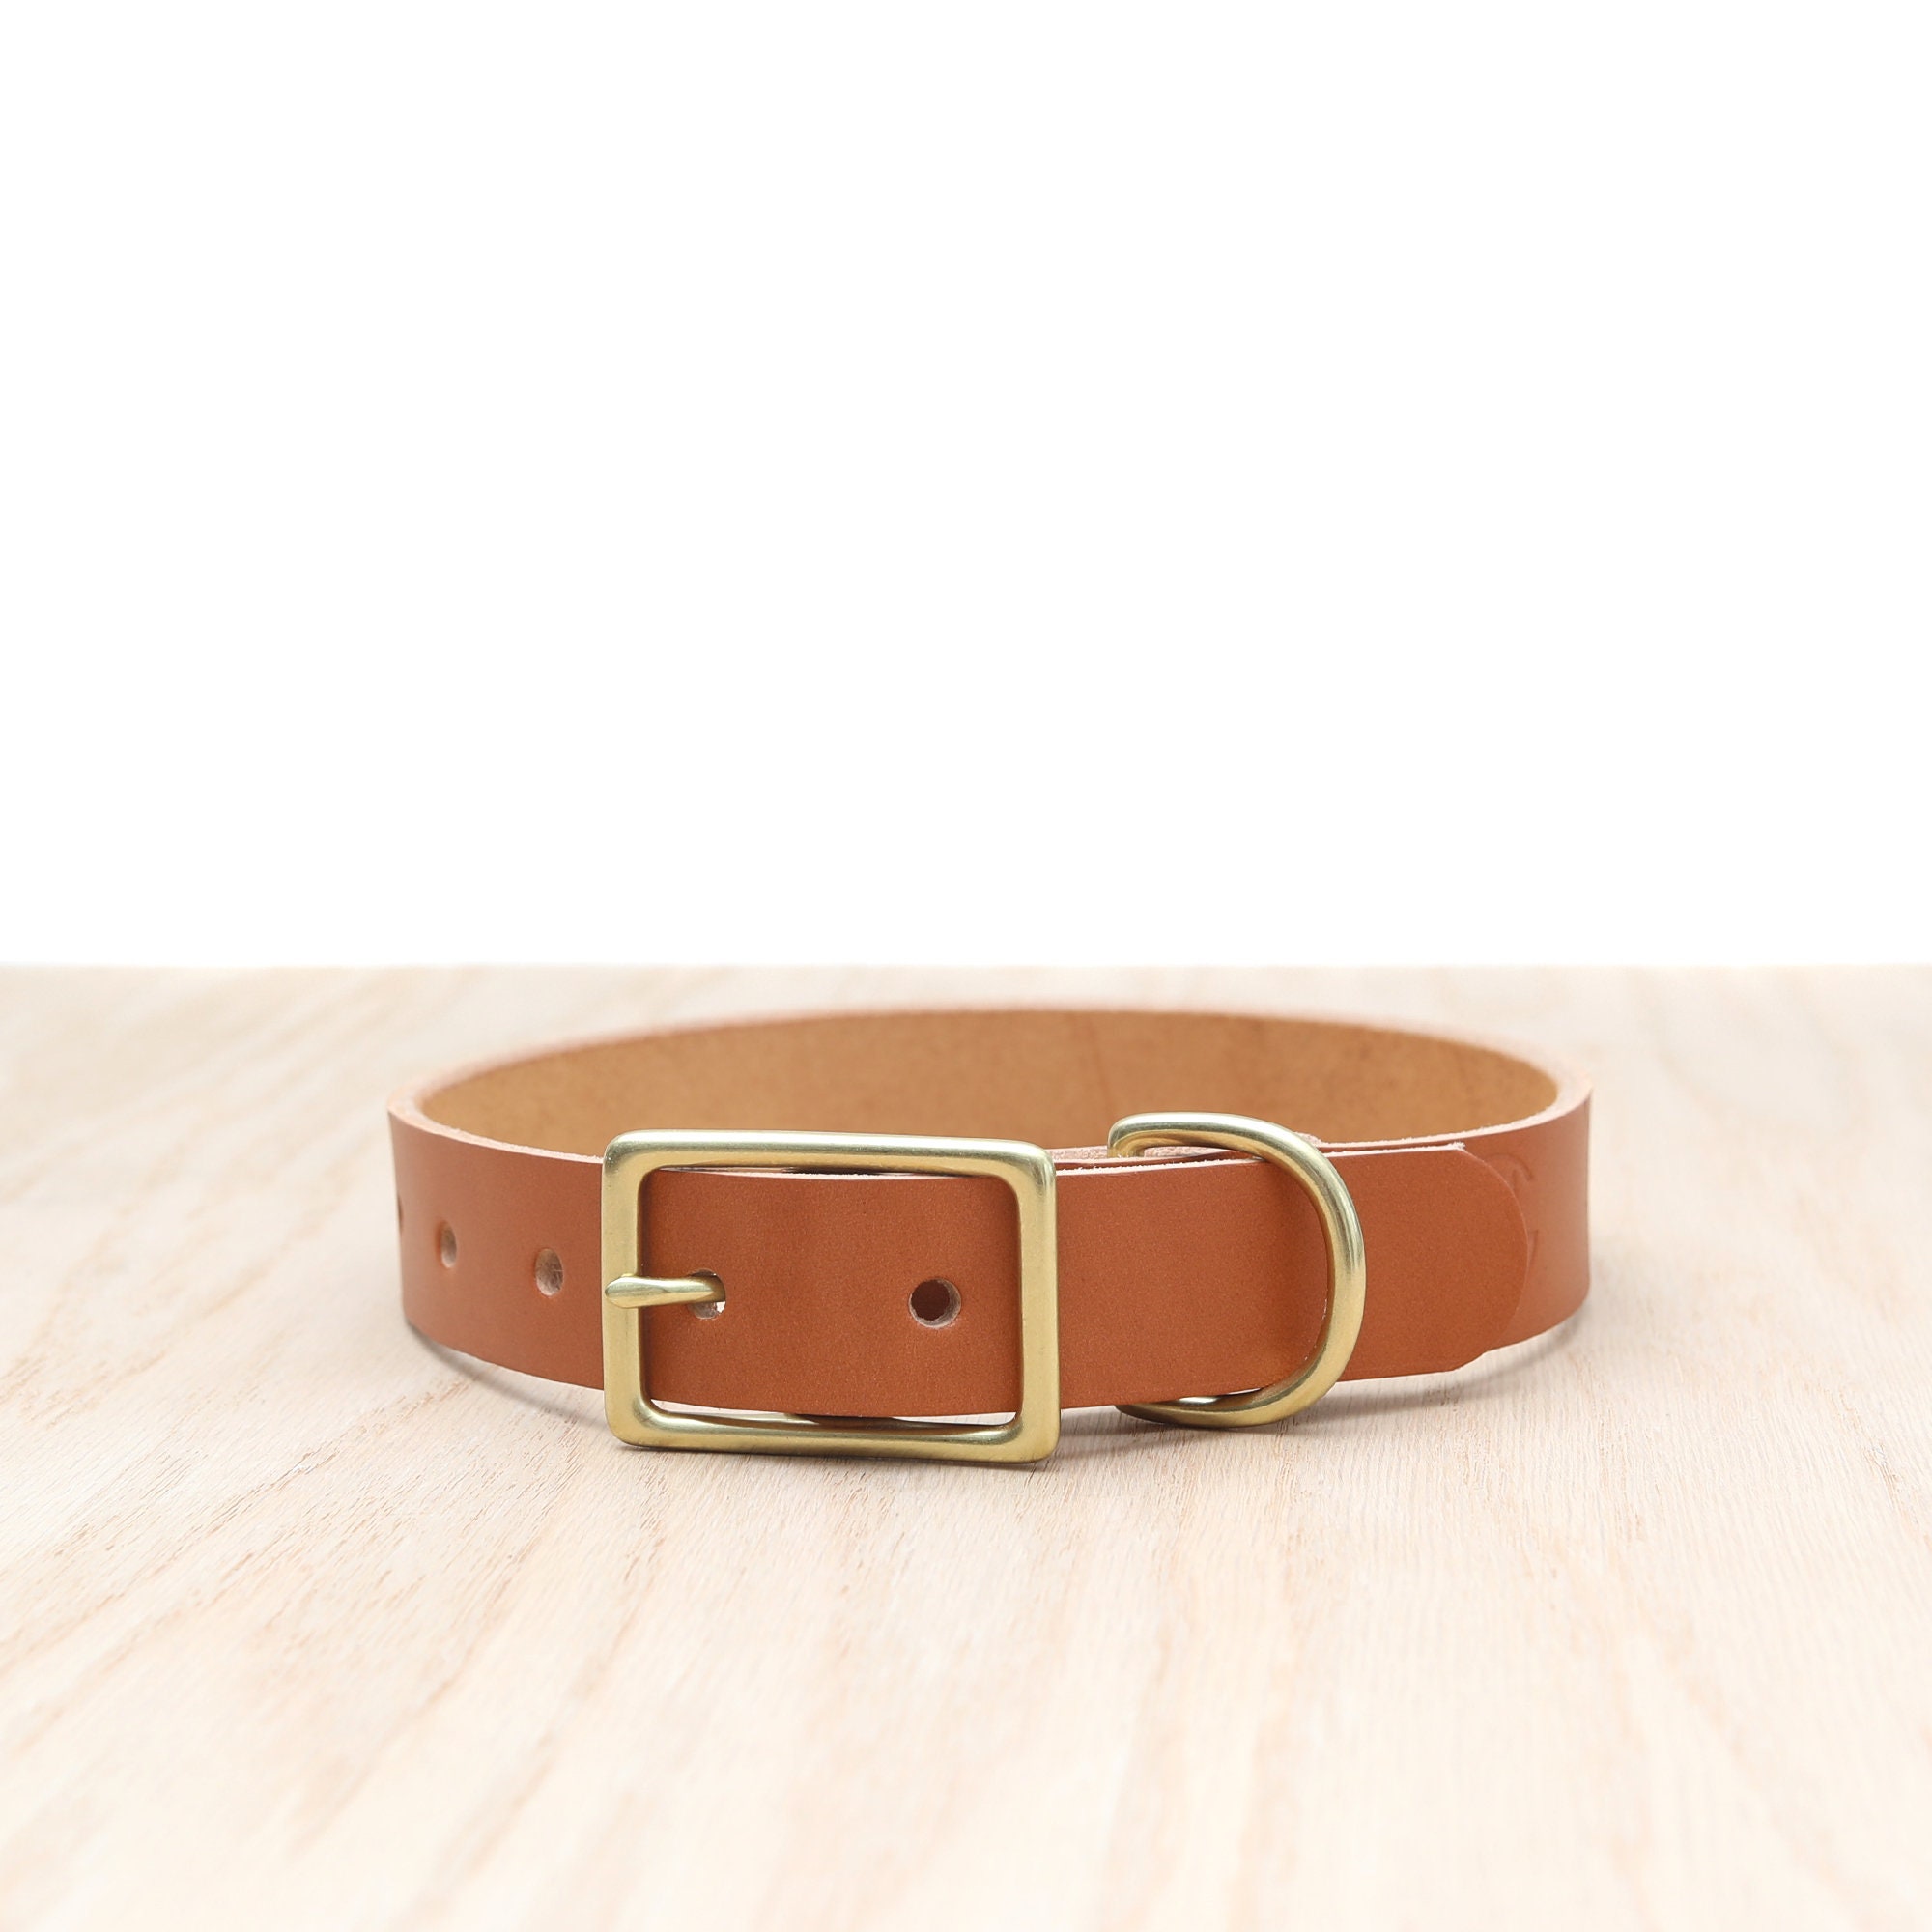 Custom Tan Leather Dog Collar Full Grain Leather Collar W | Etsy